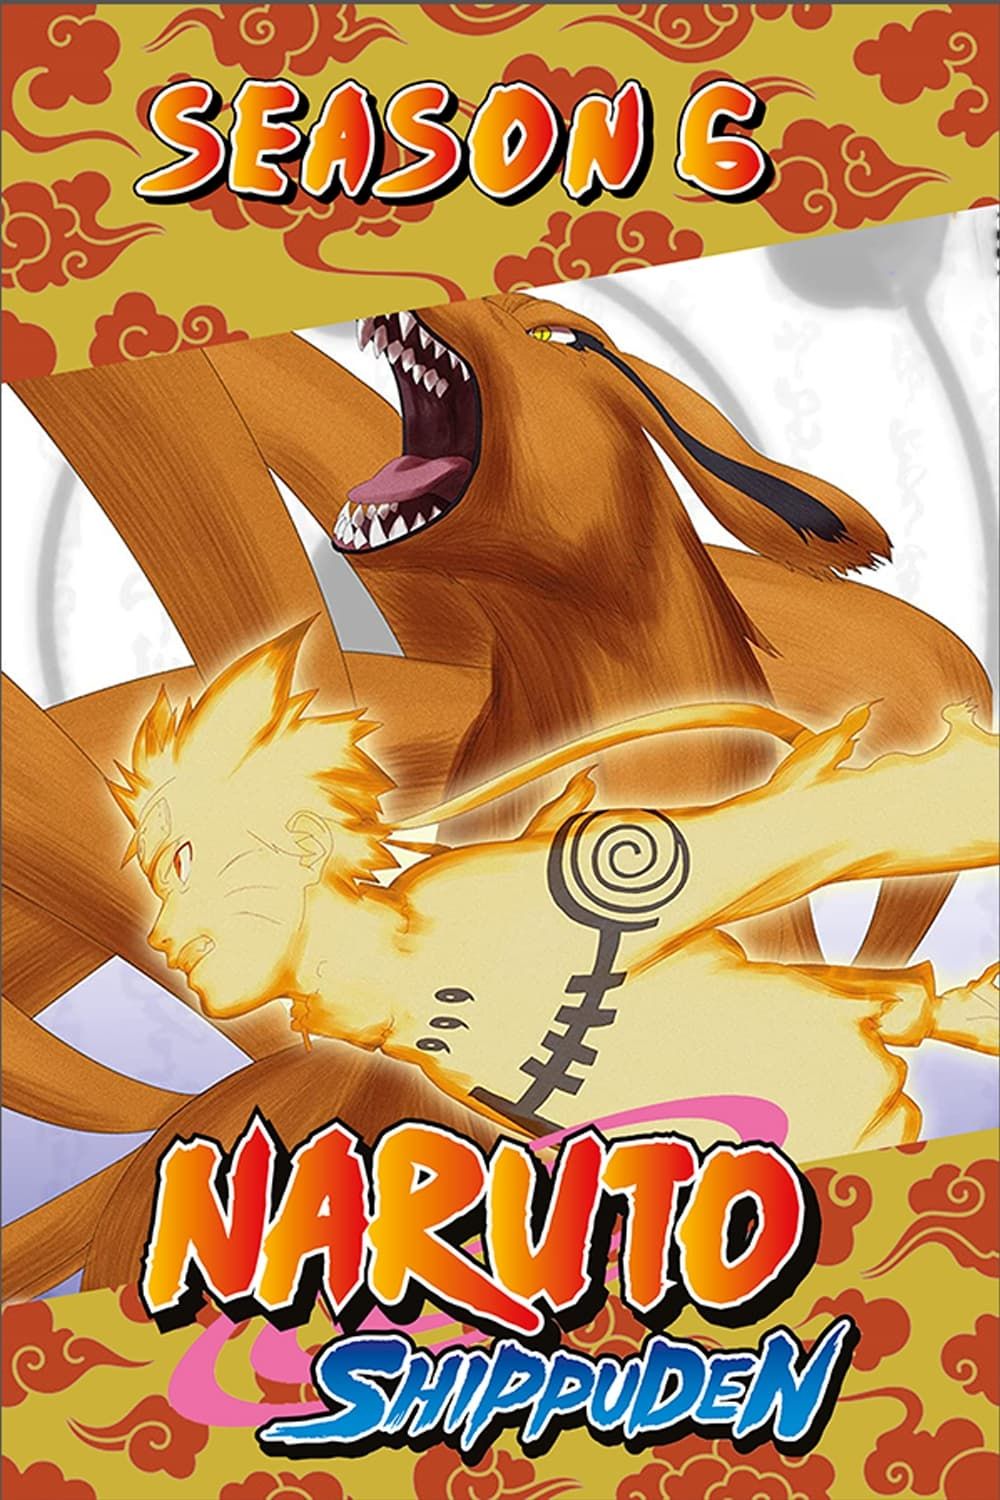 Watch Naruto Shippuden Season 3 Episode 141 - Truth Online Now